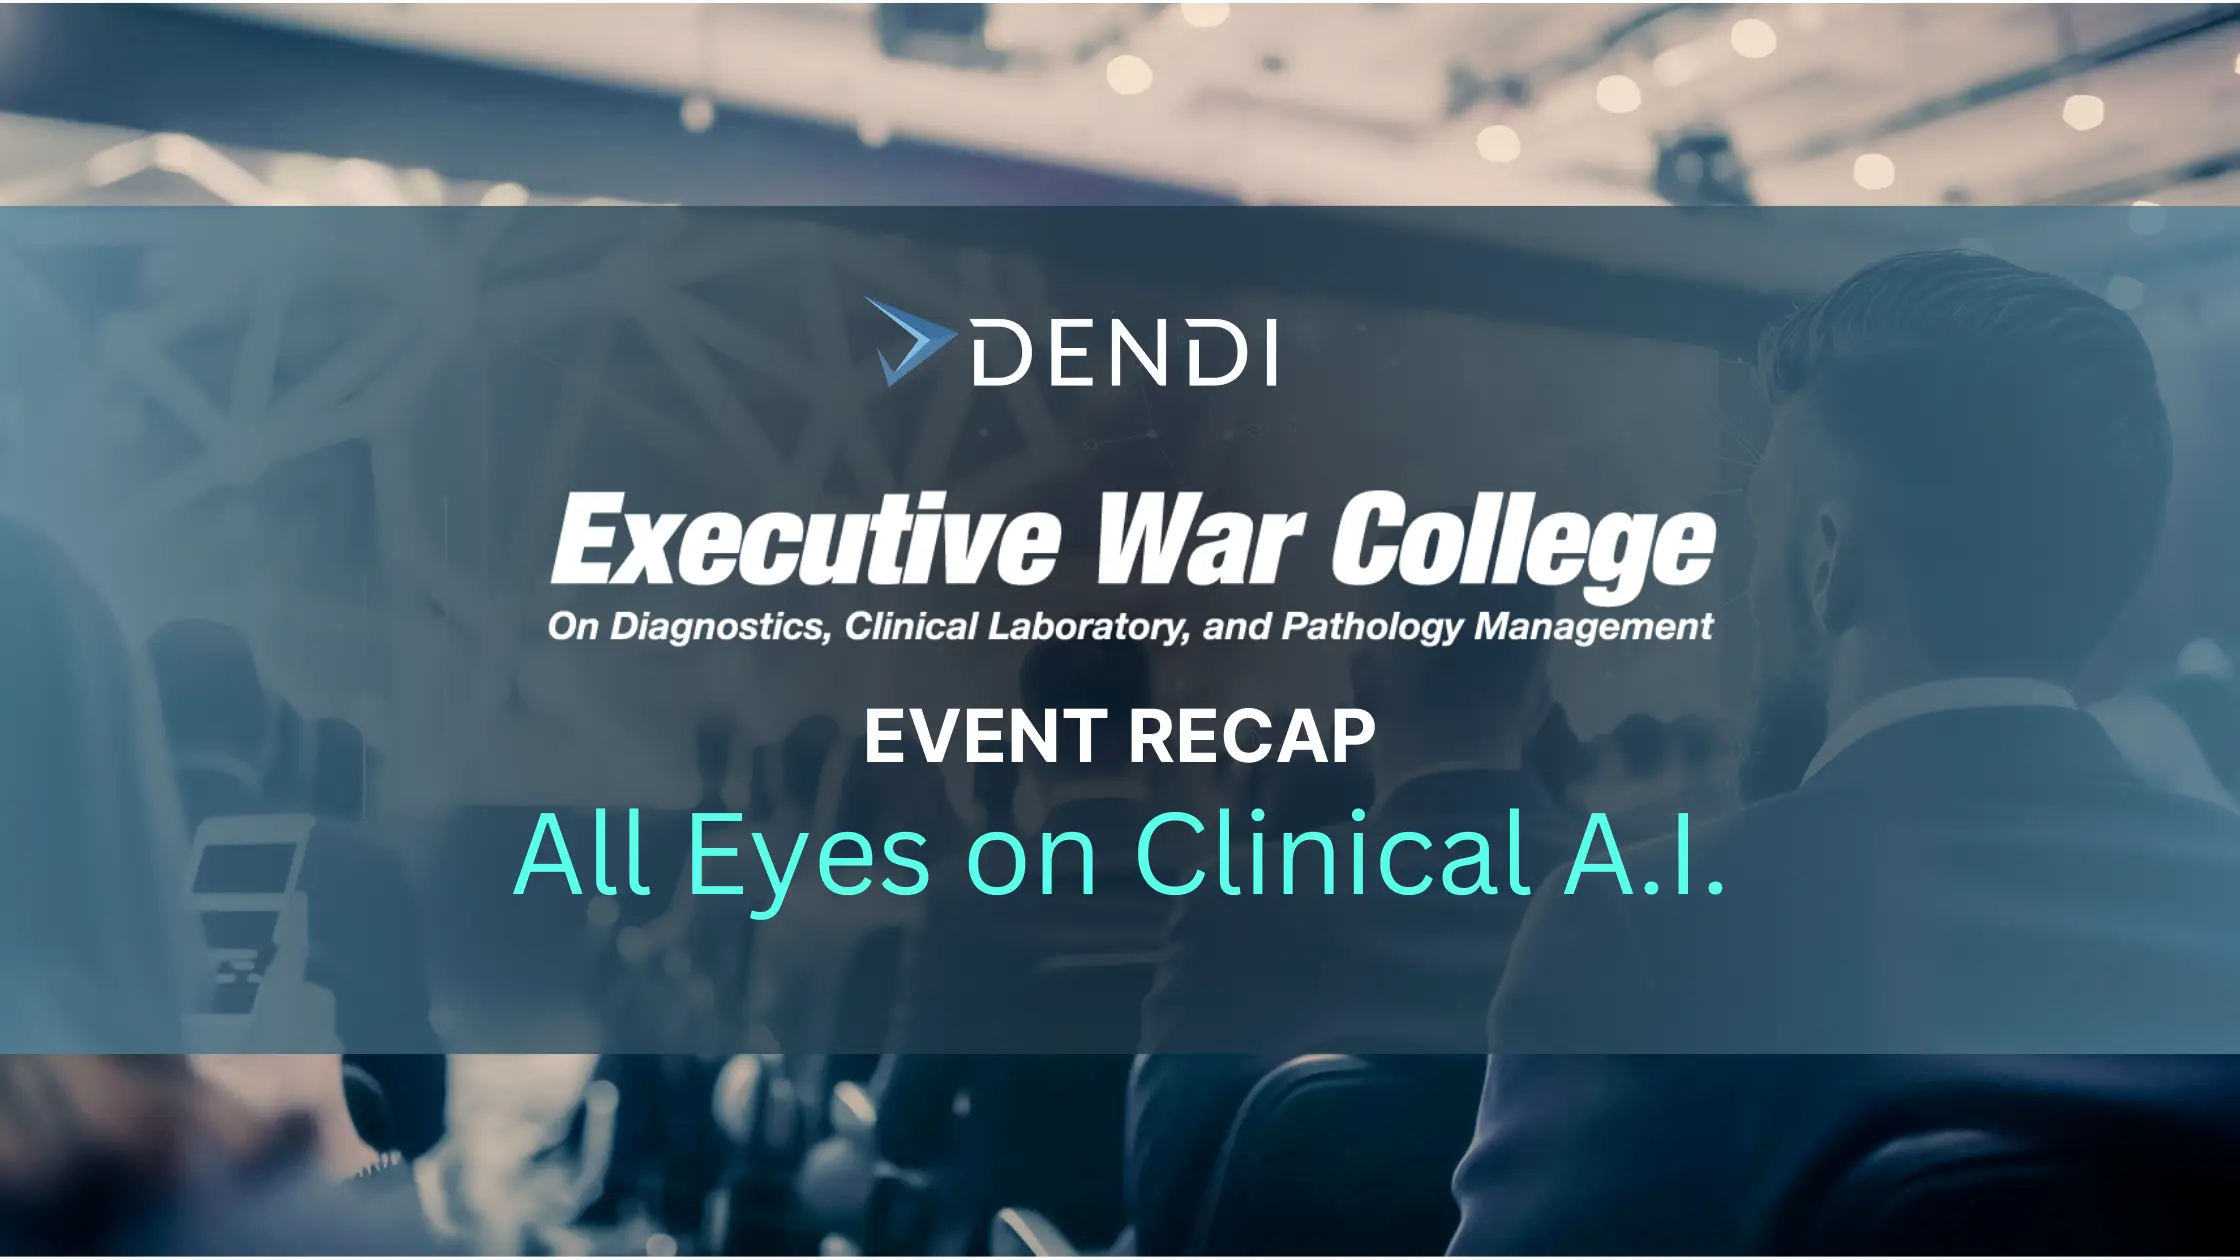 DENDI Executive War College Event Recap, All Eyes on Clinical A.I.